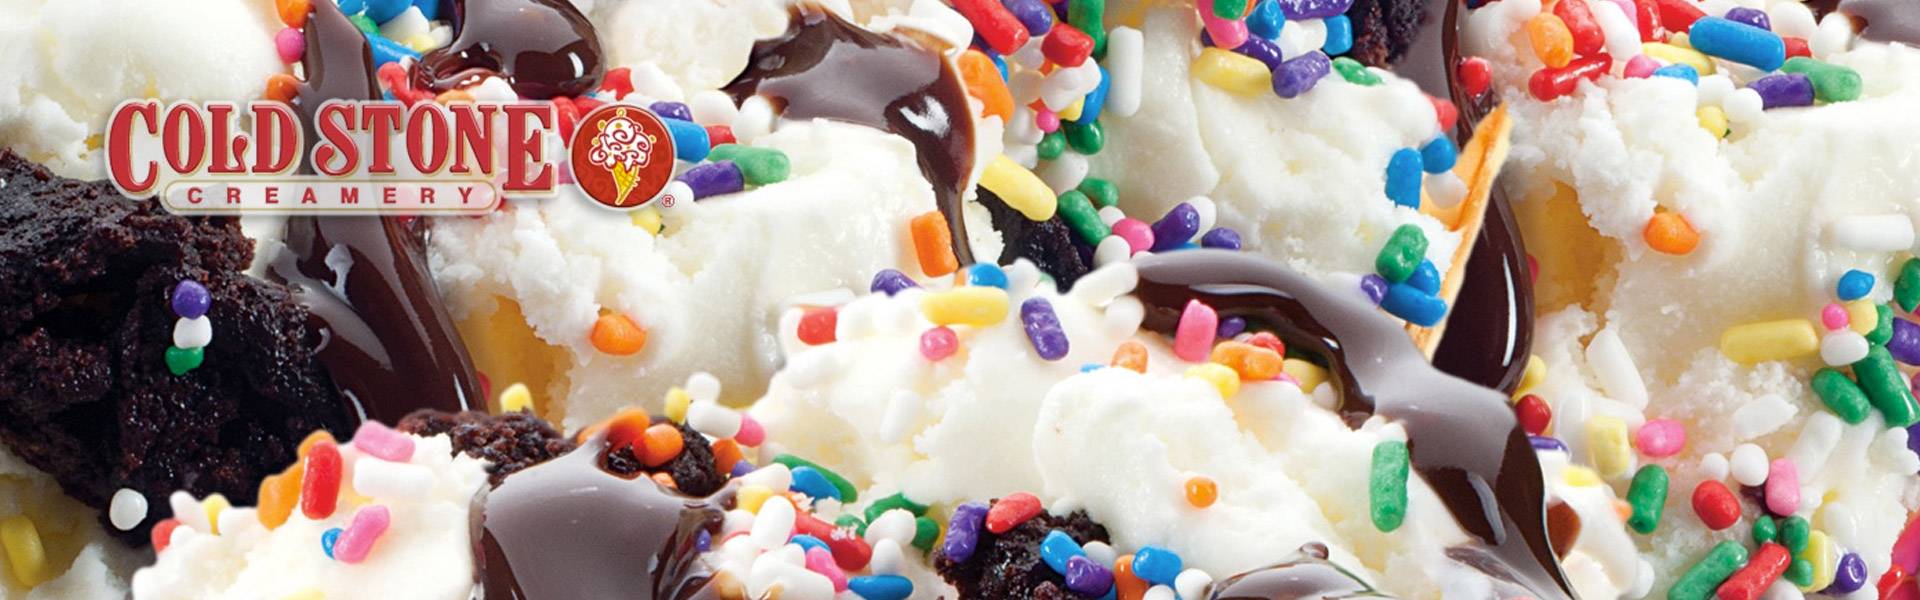 Close up view of ice cream